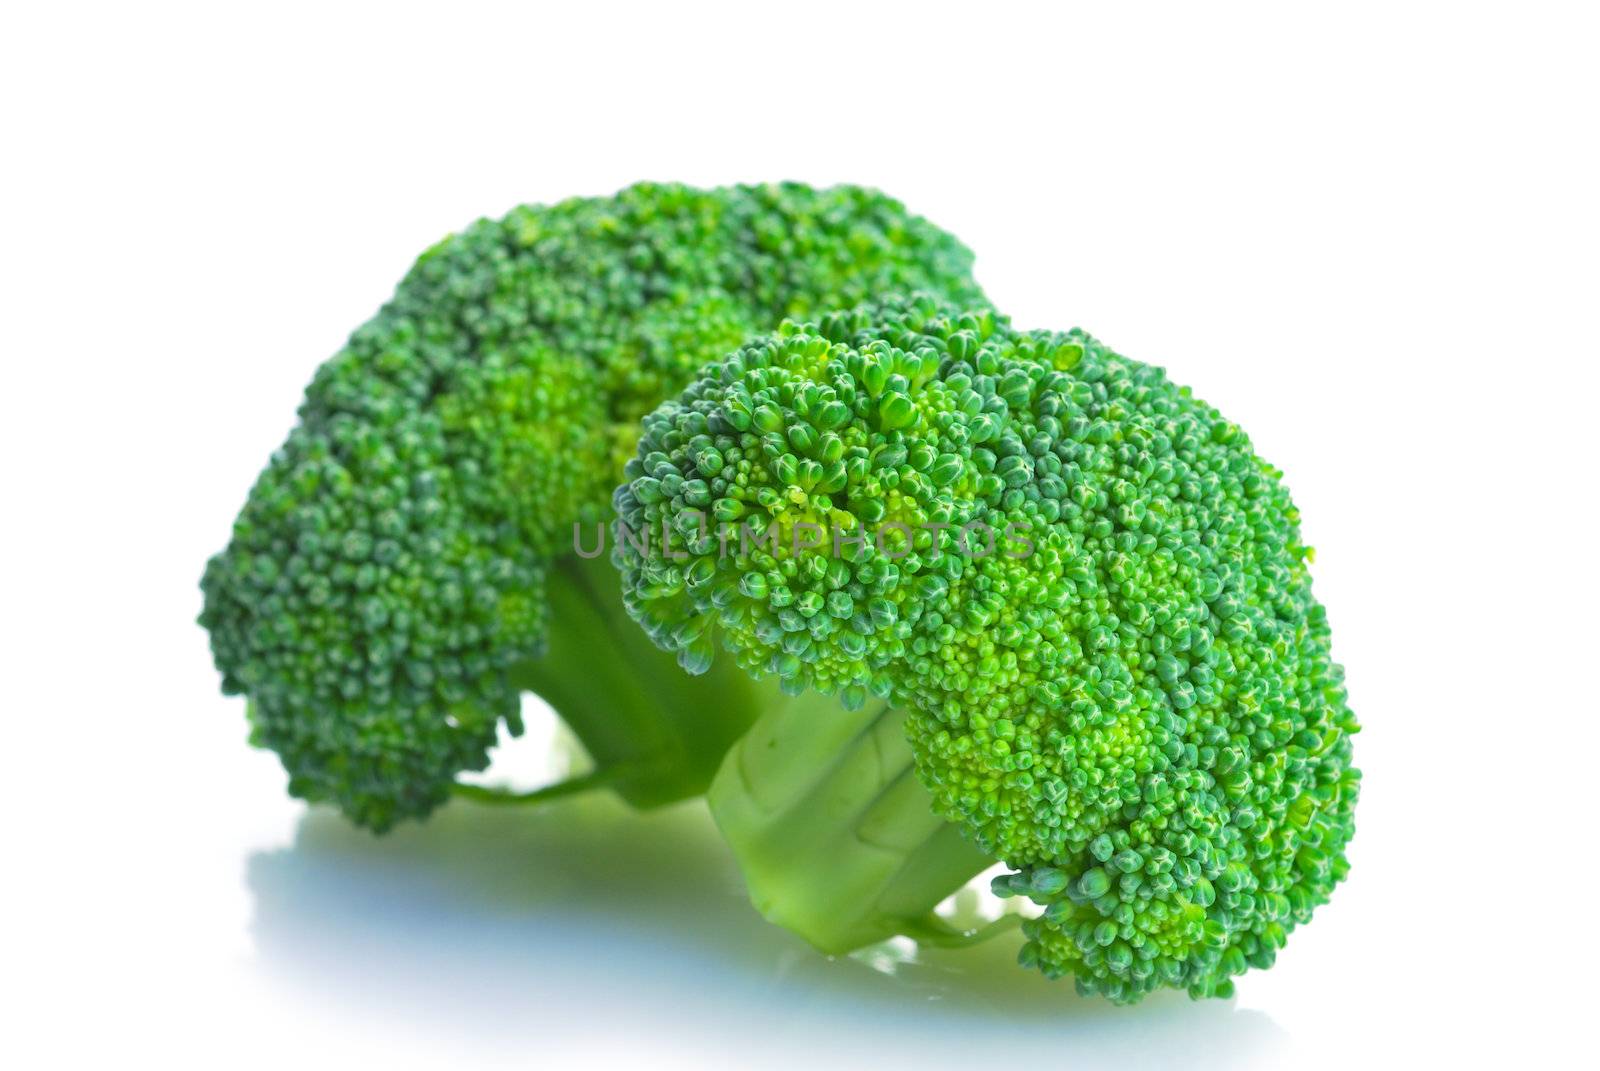 Broccoli vegetable by teen00000